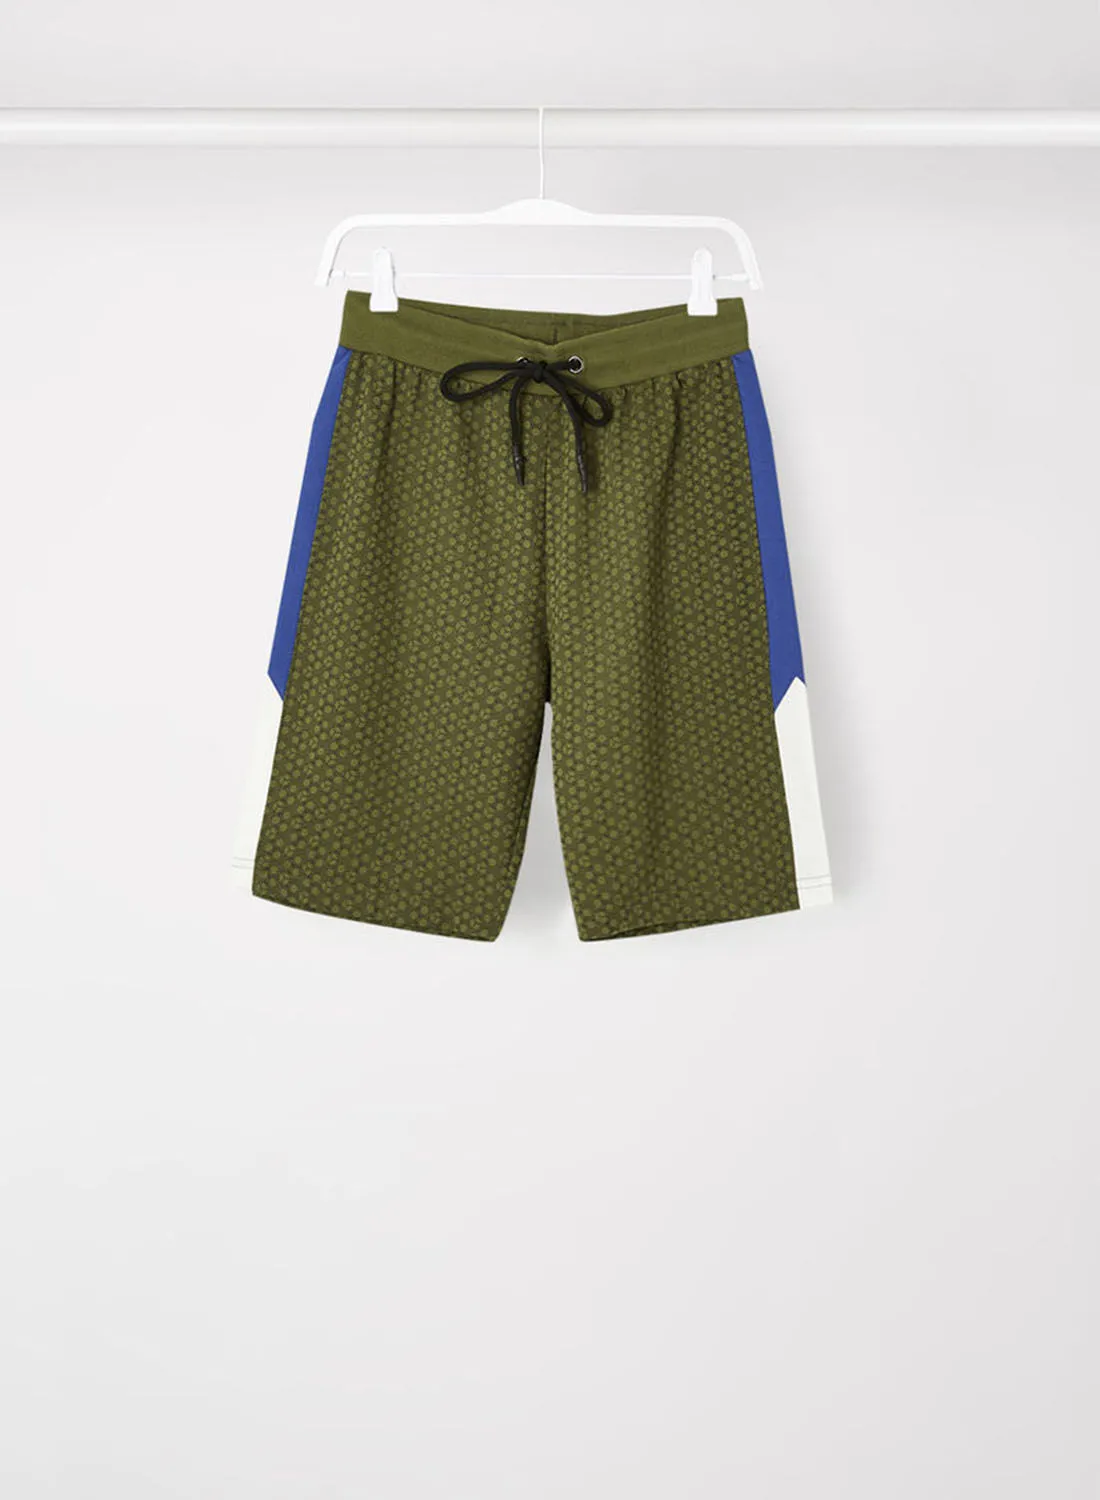 ABOF All Over Printed Elastic Waistband Drawstring Shorts Green/Blue/White